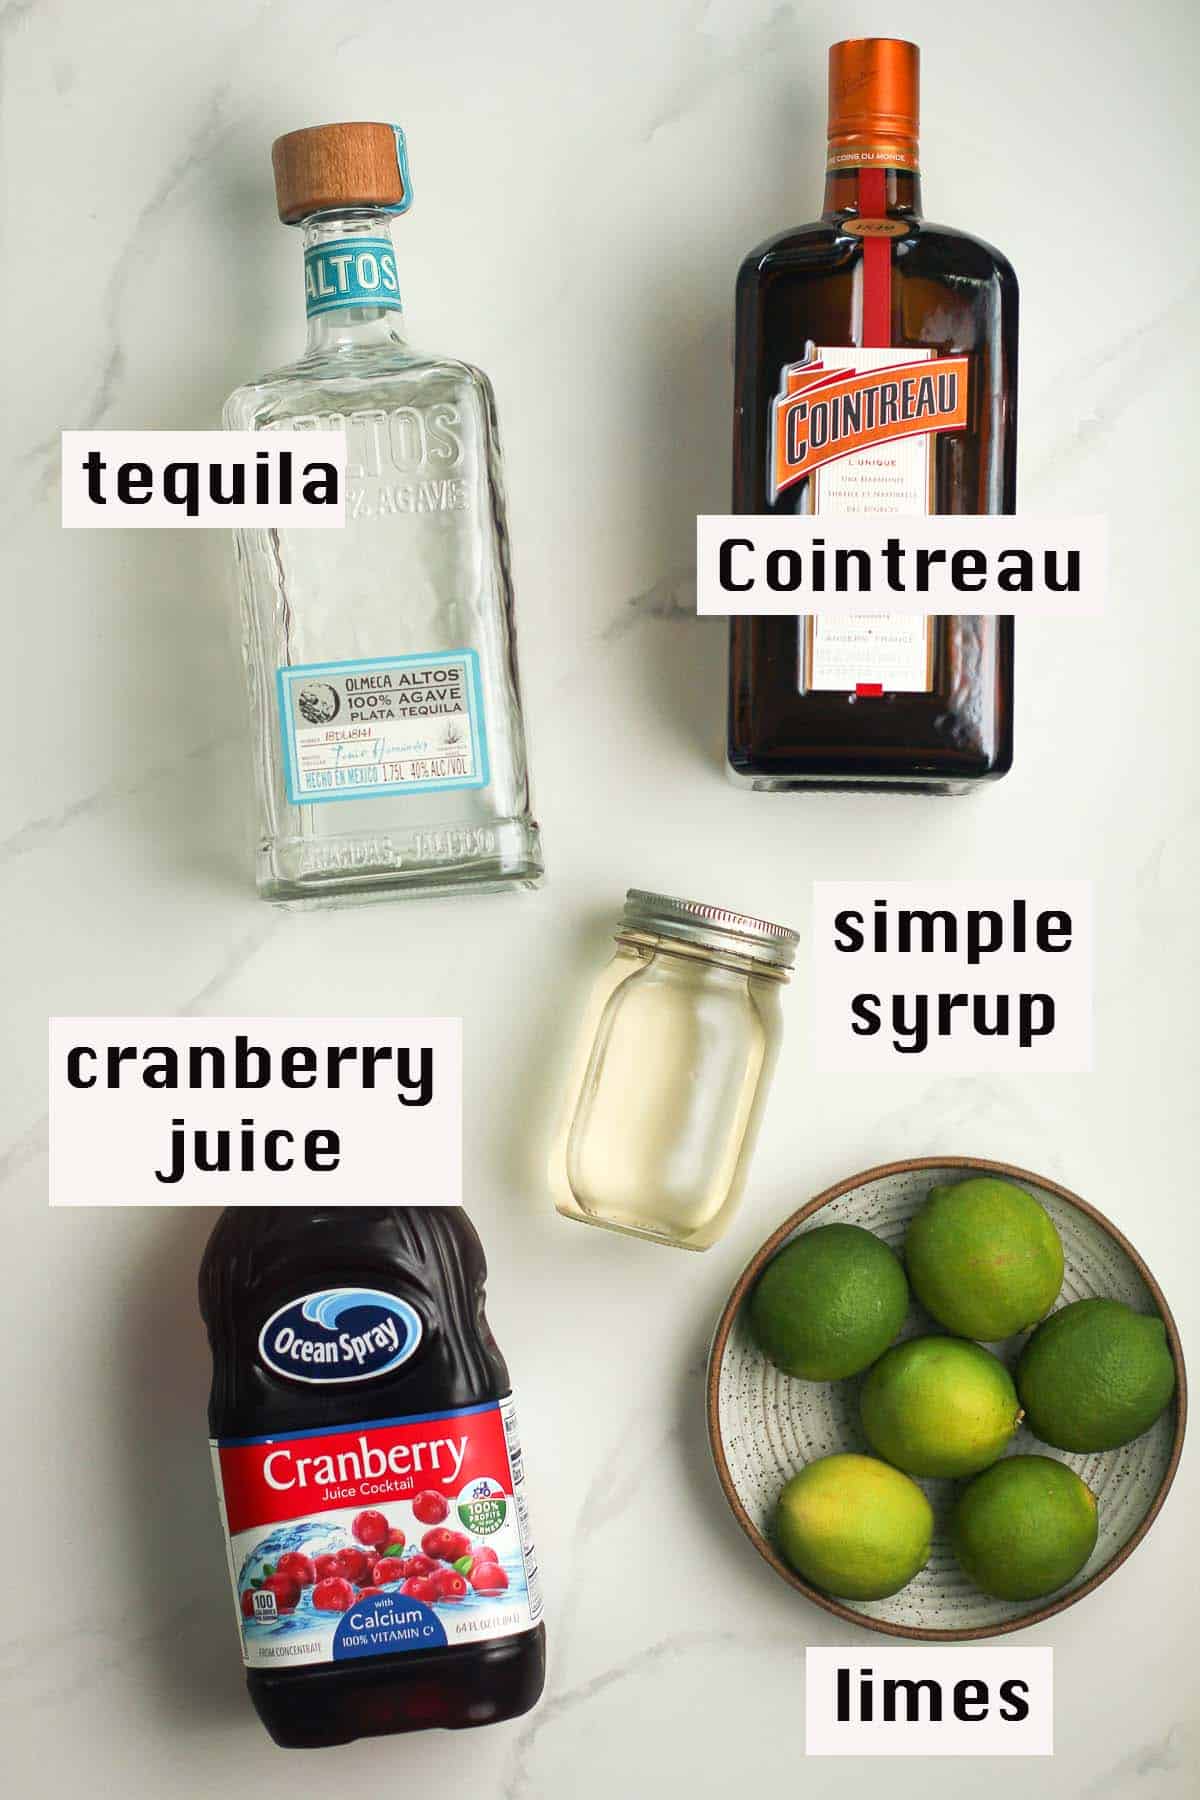 The margarita ingredients.